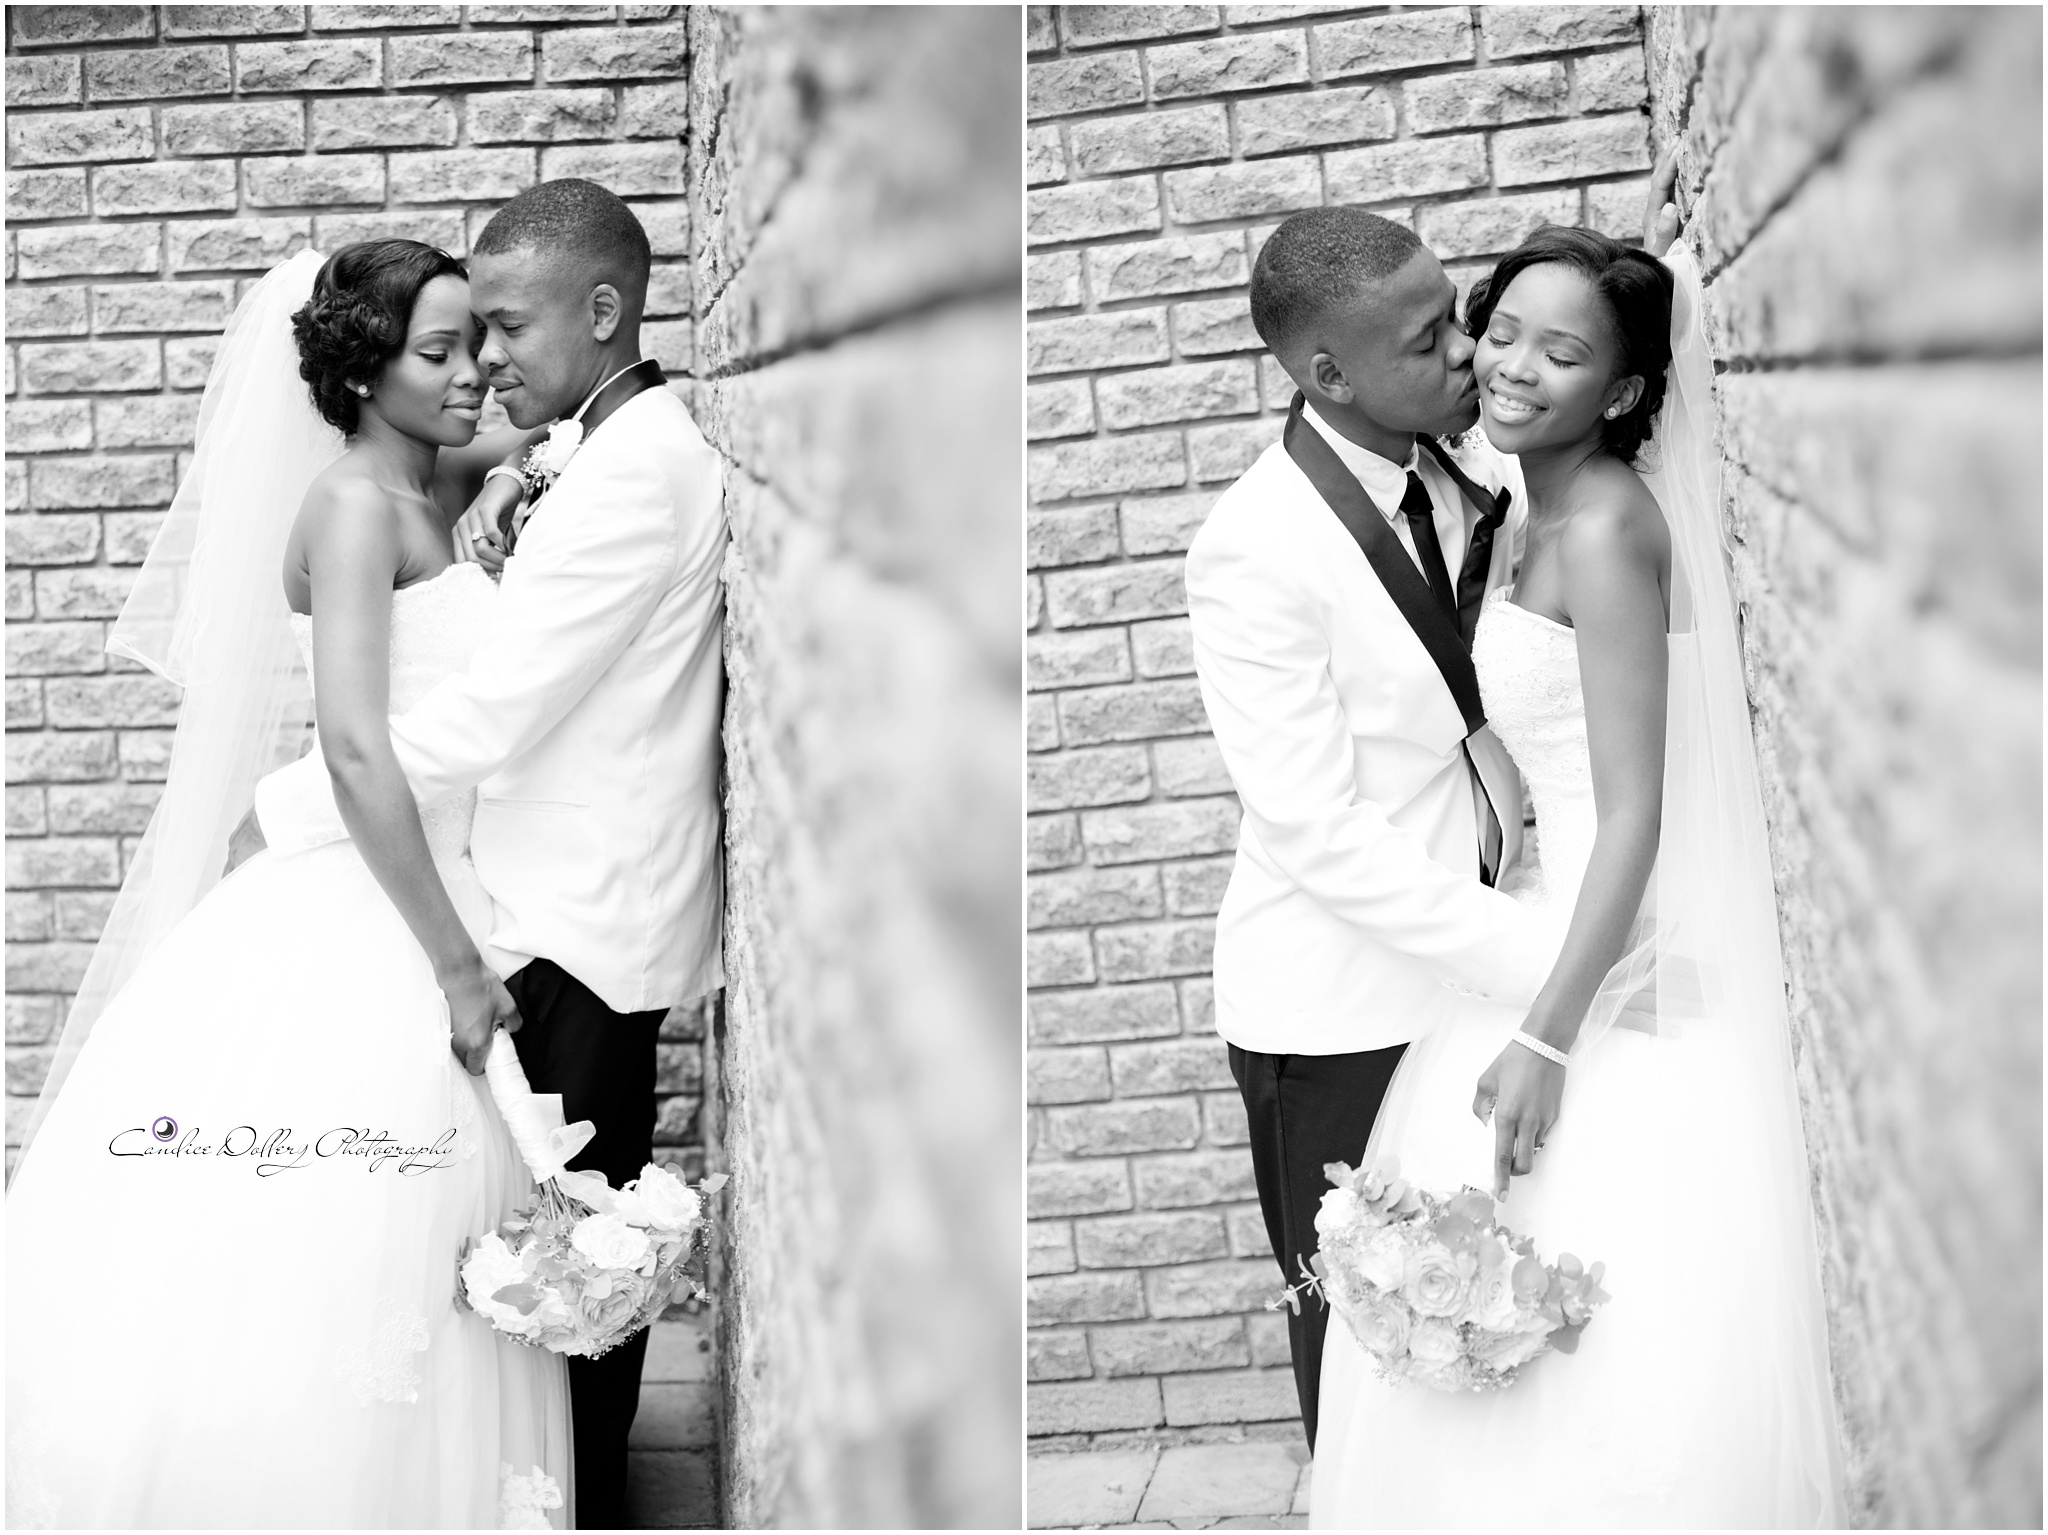 Asanda & Bonga's Wedding - Candice Dollery Photography_8243